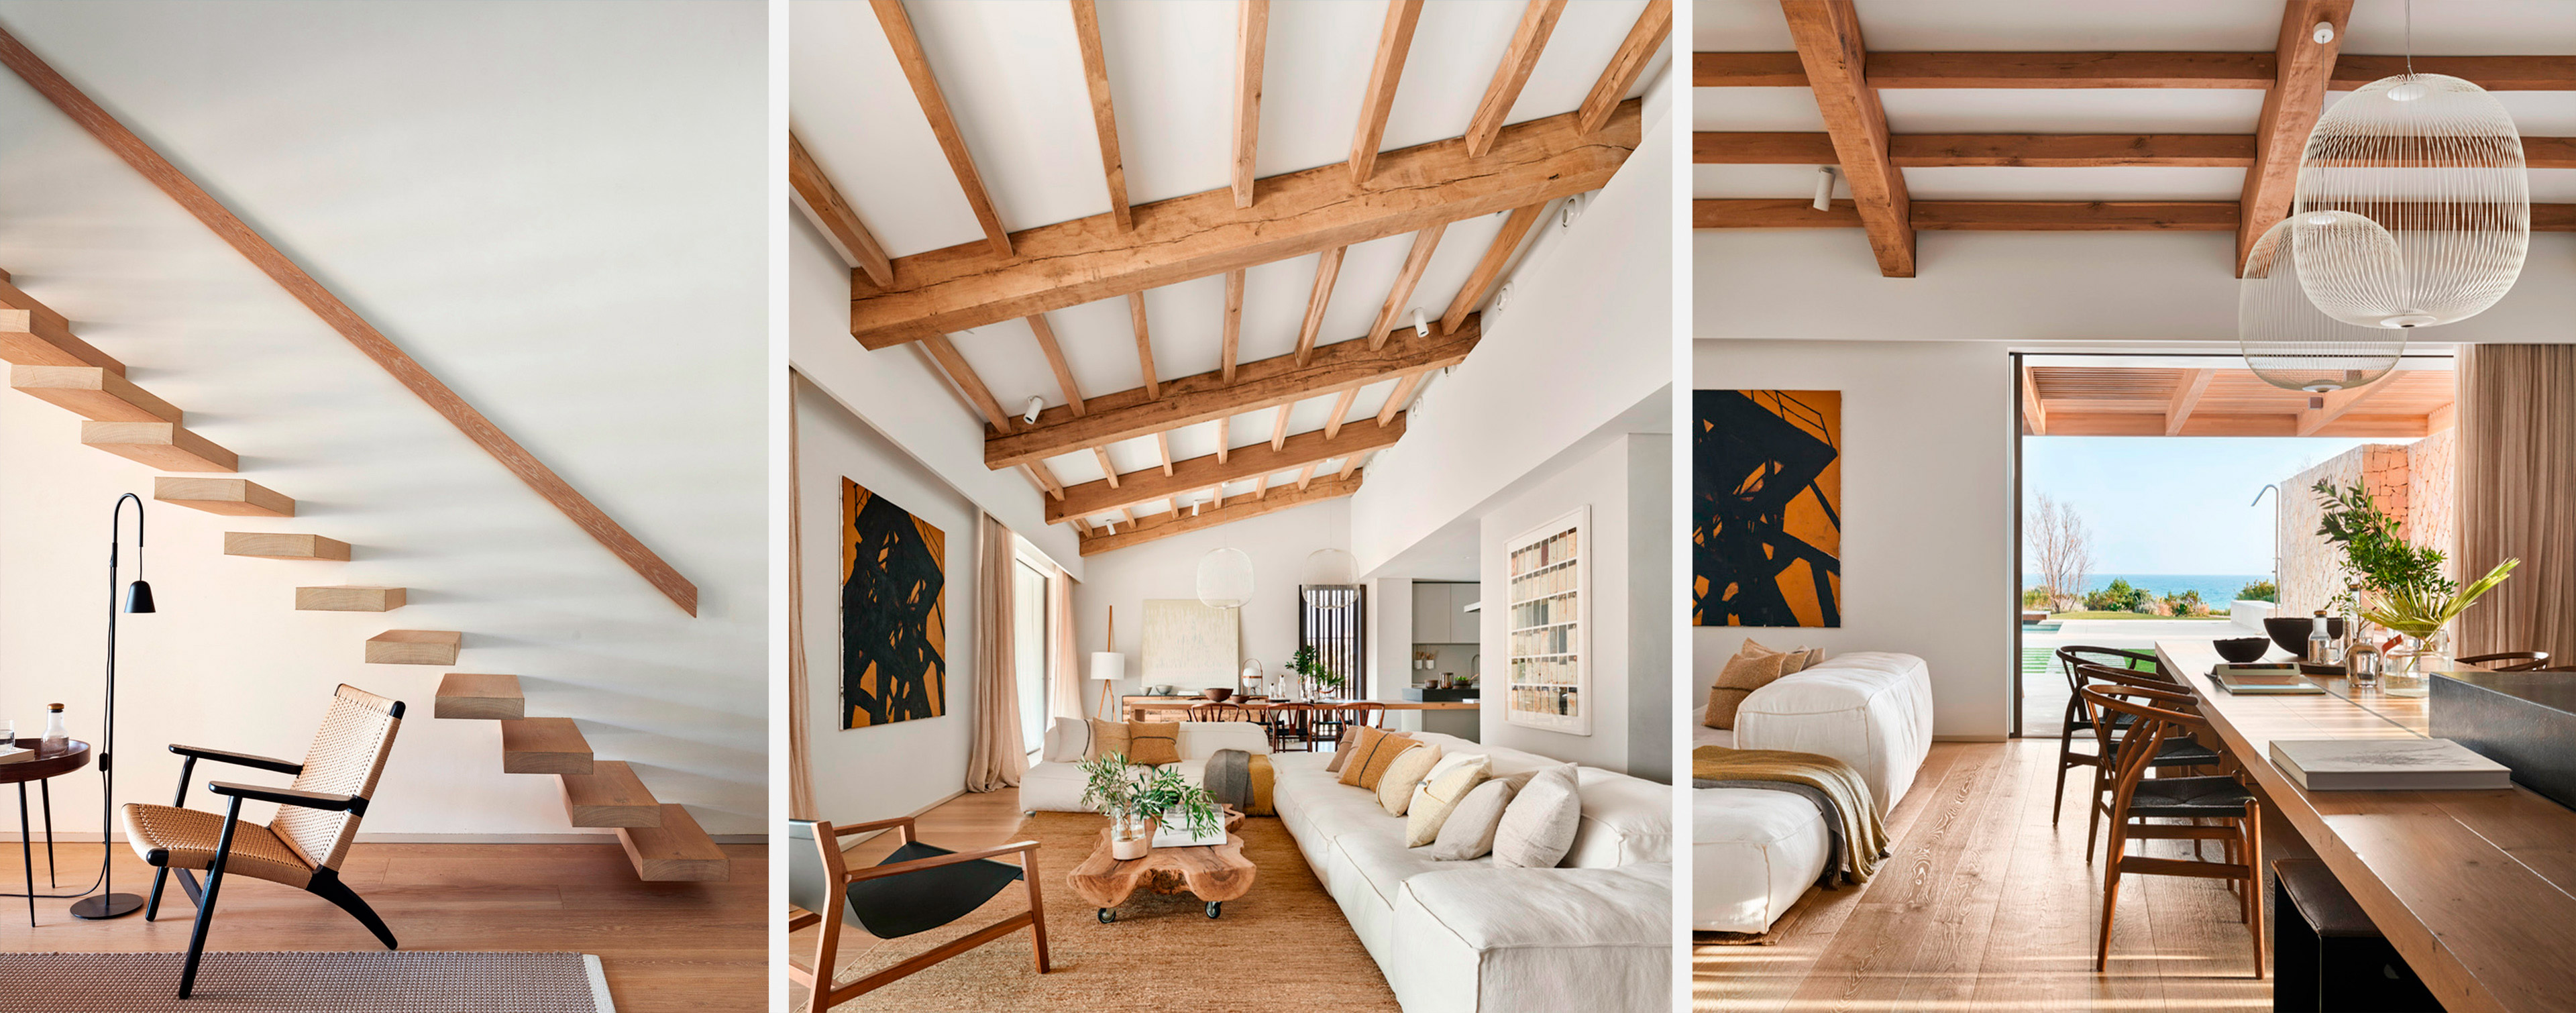 luv studio luxury architects algarve da rocha house IMG 01 - CASA DA ROCHA